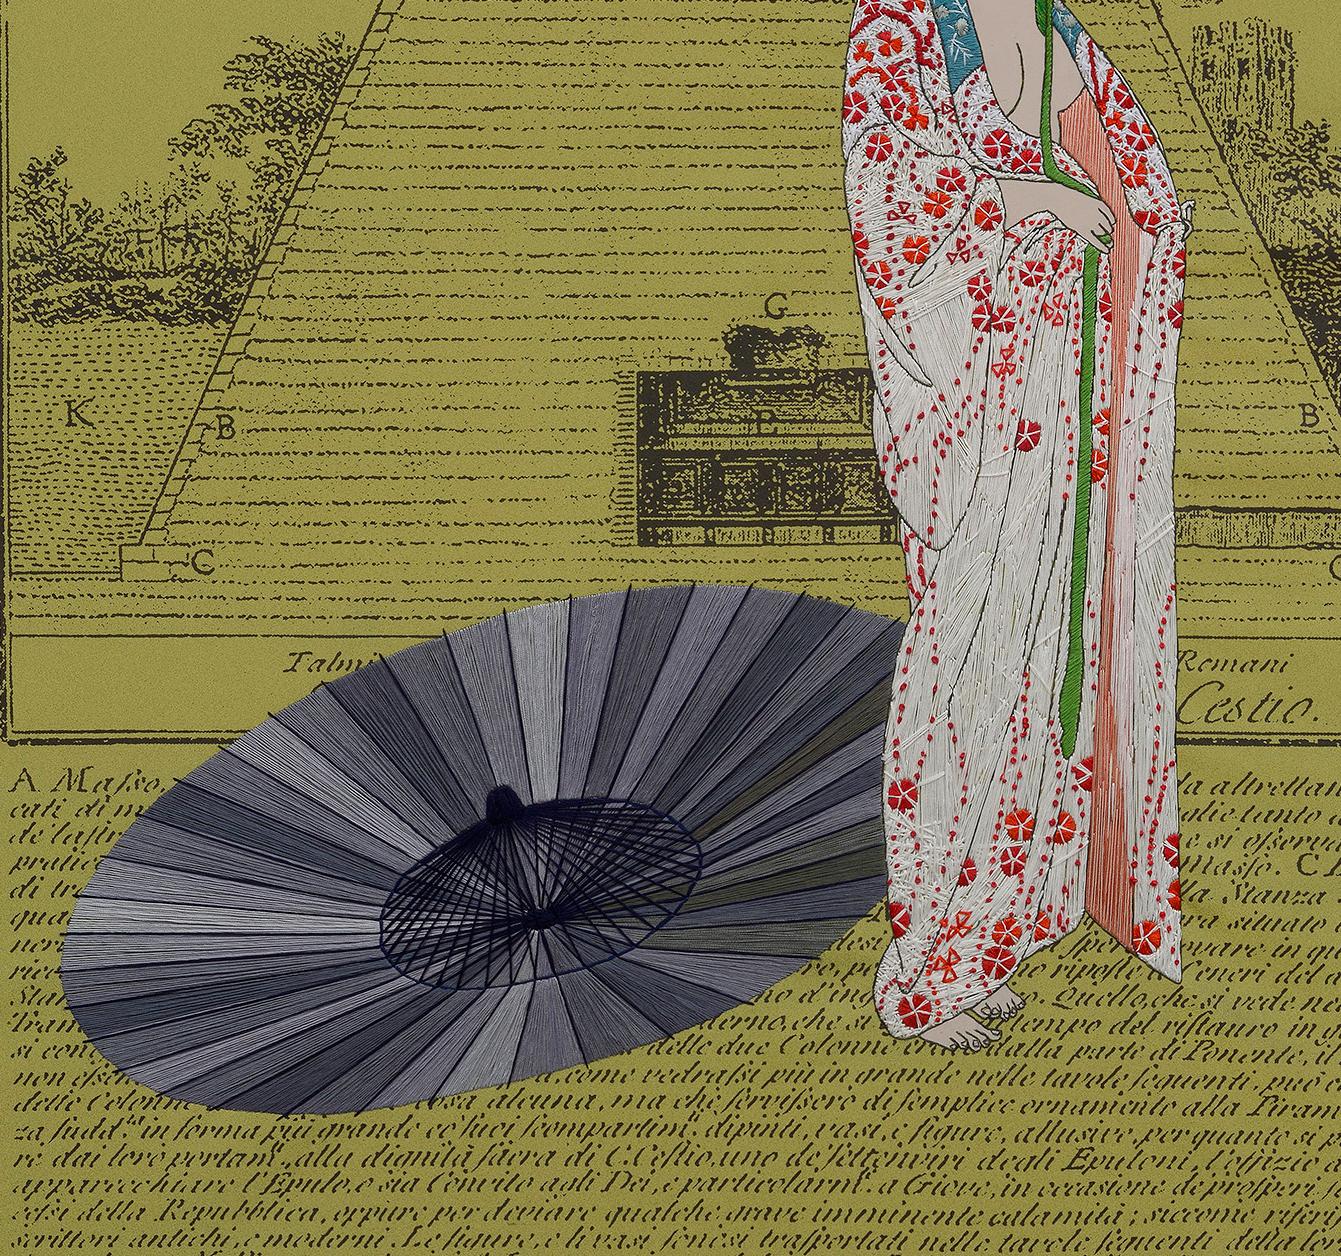 Geisha V, 2021 by Ana Seggiaro
From the series 